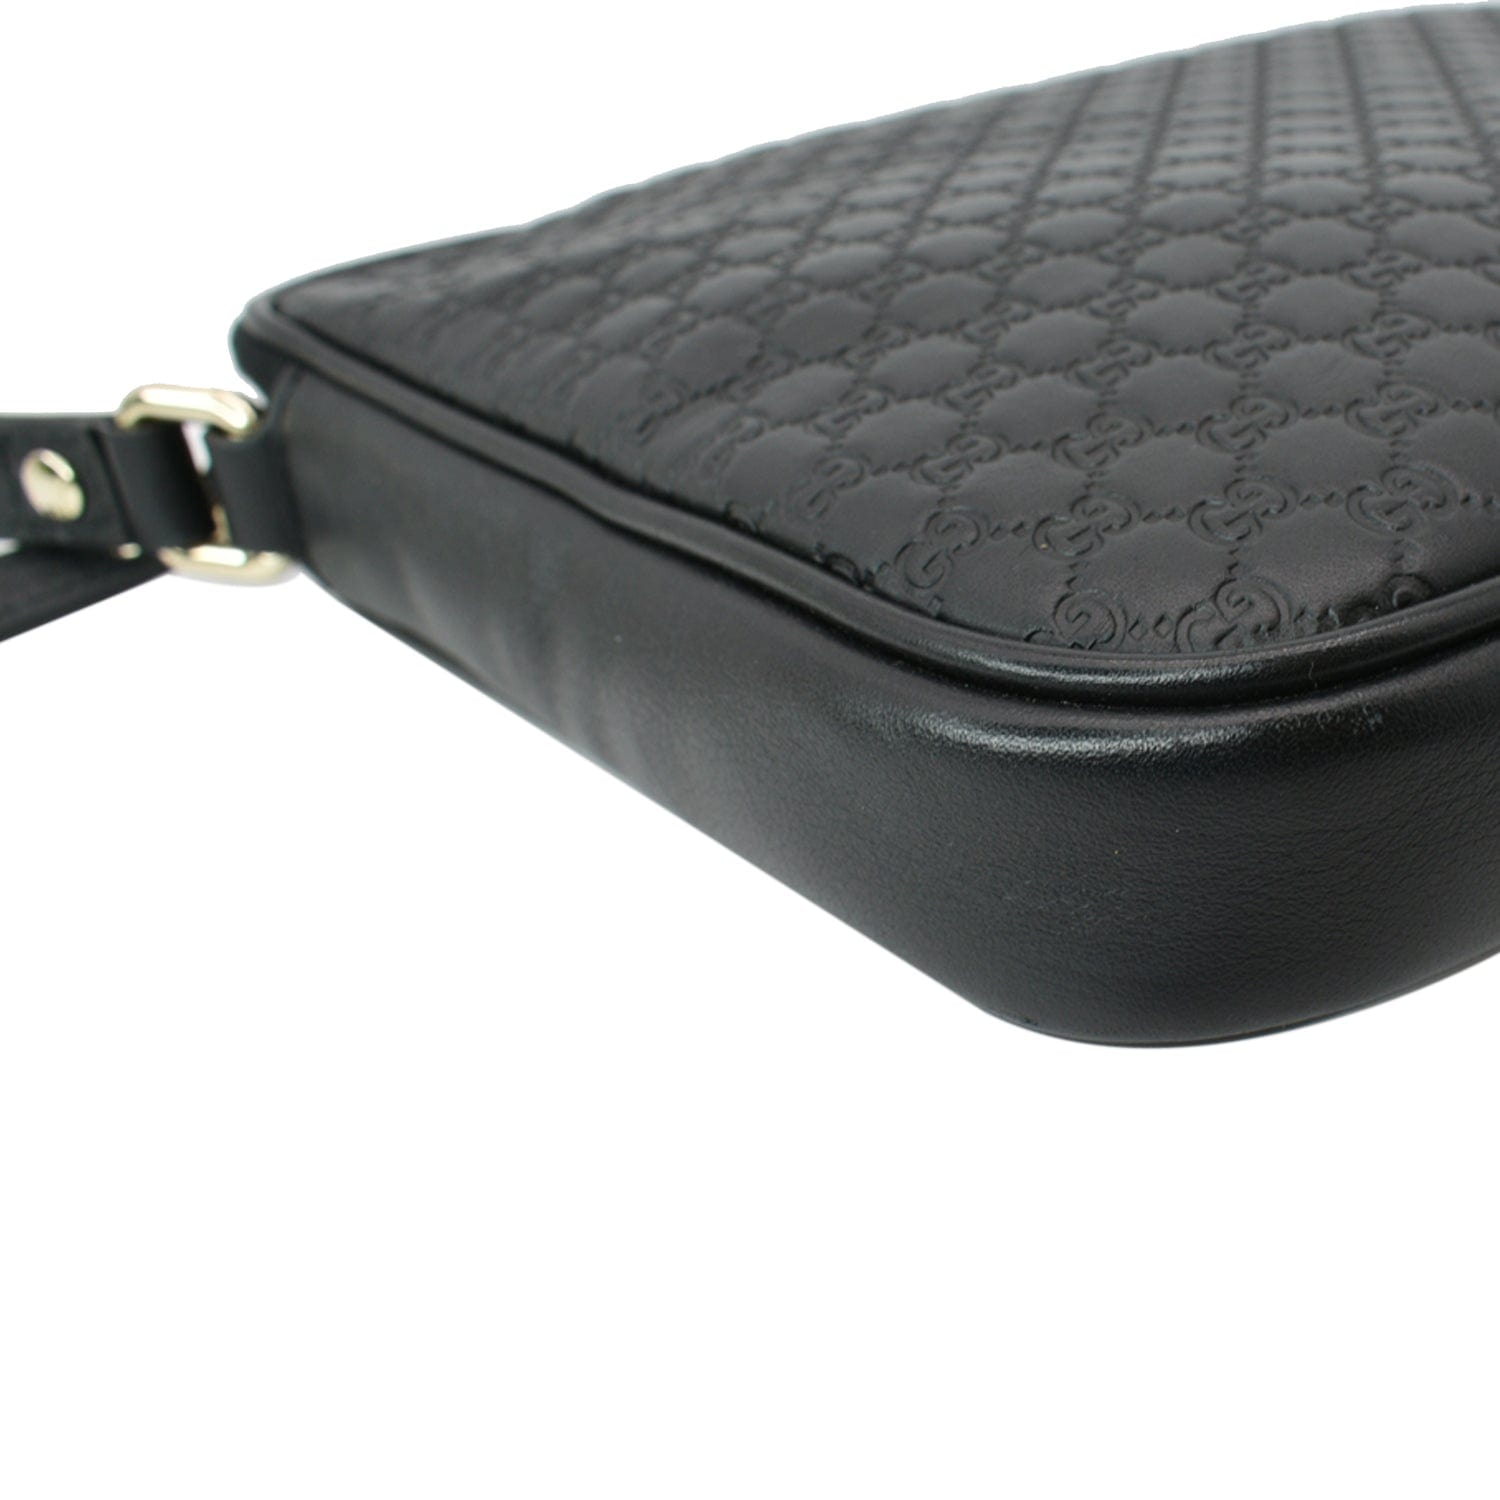 Gucci Handbags Women 6022700OLFX8277 Leather Black Red 1592€